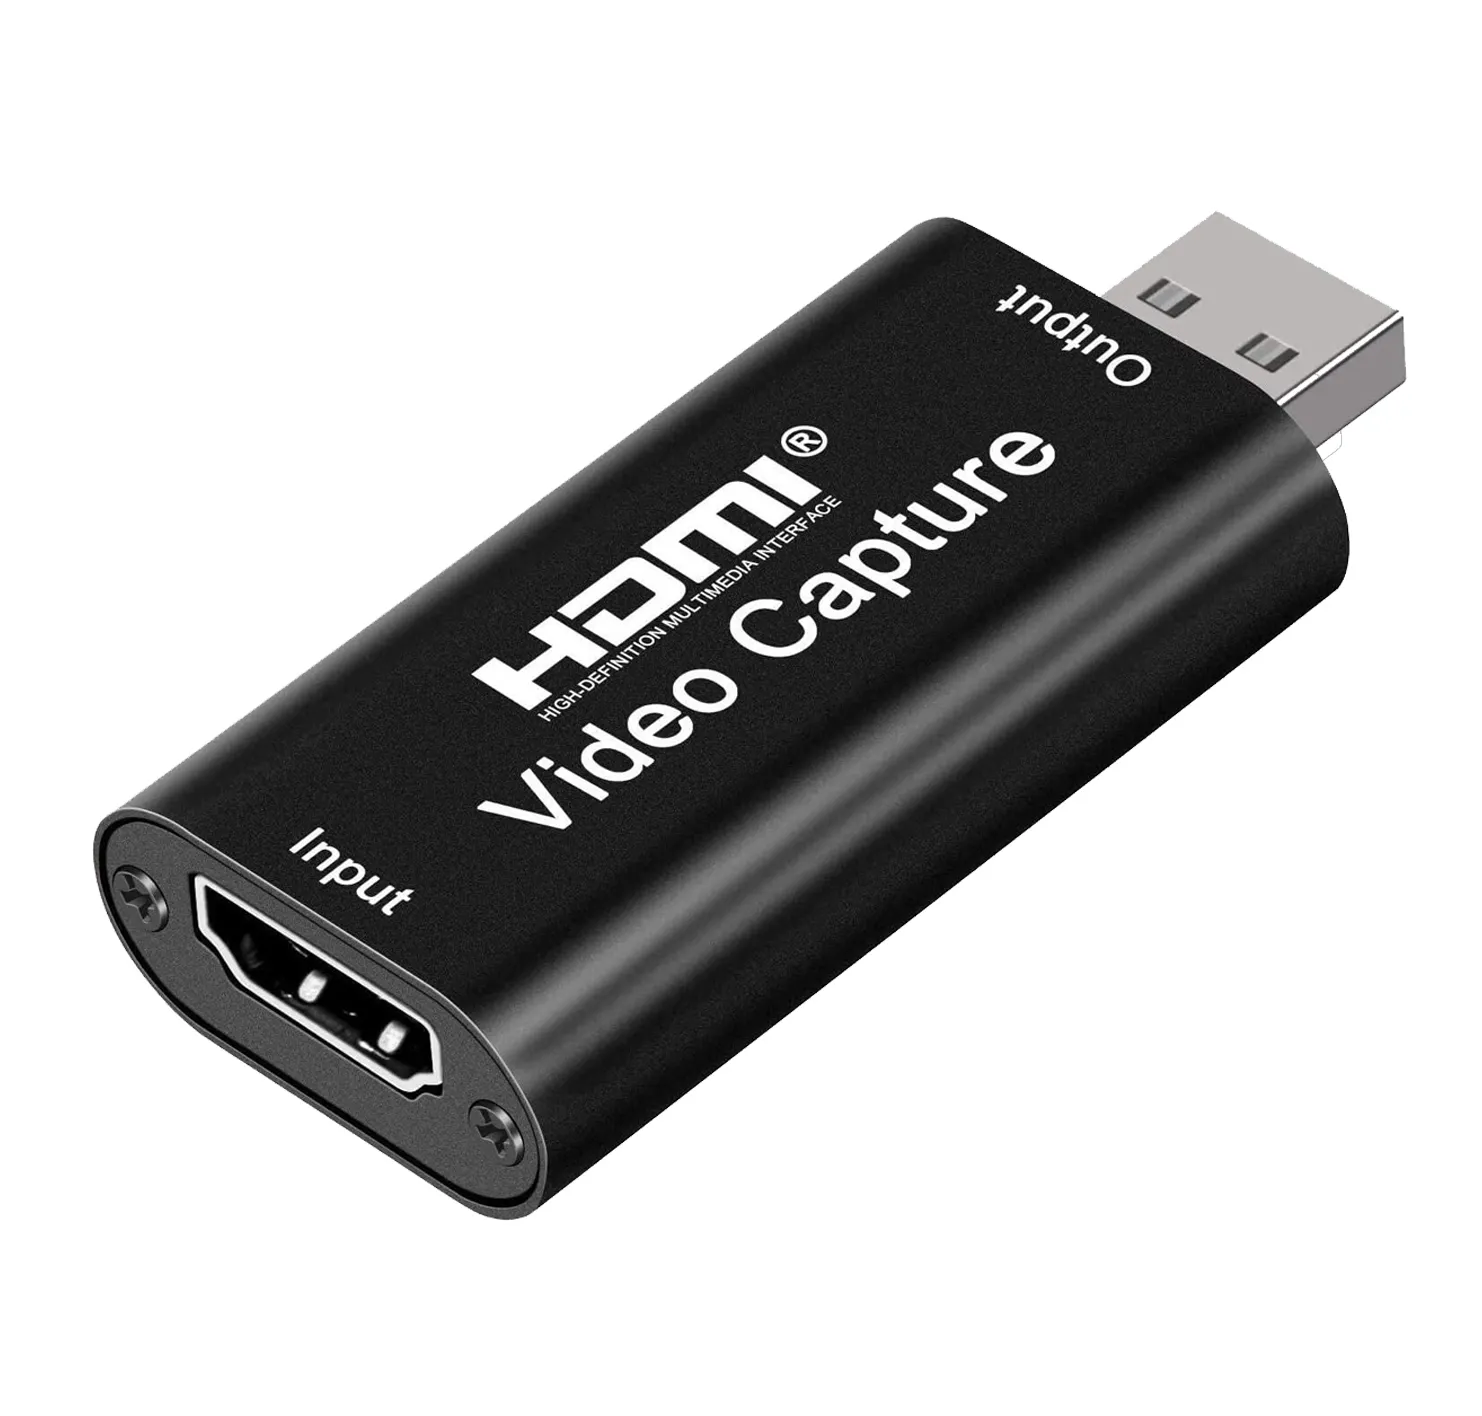 DTECH HD mini 1080p 4k tragbare live aufnahme USB hdmi video capture card